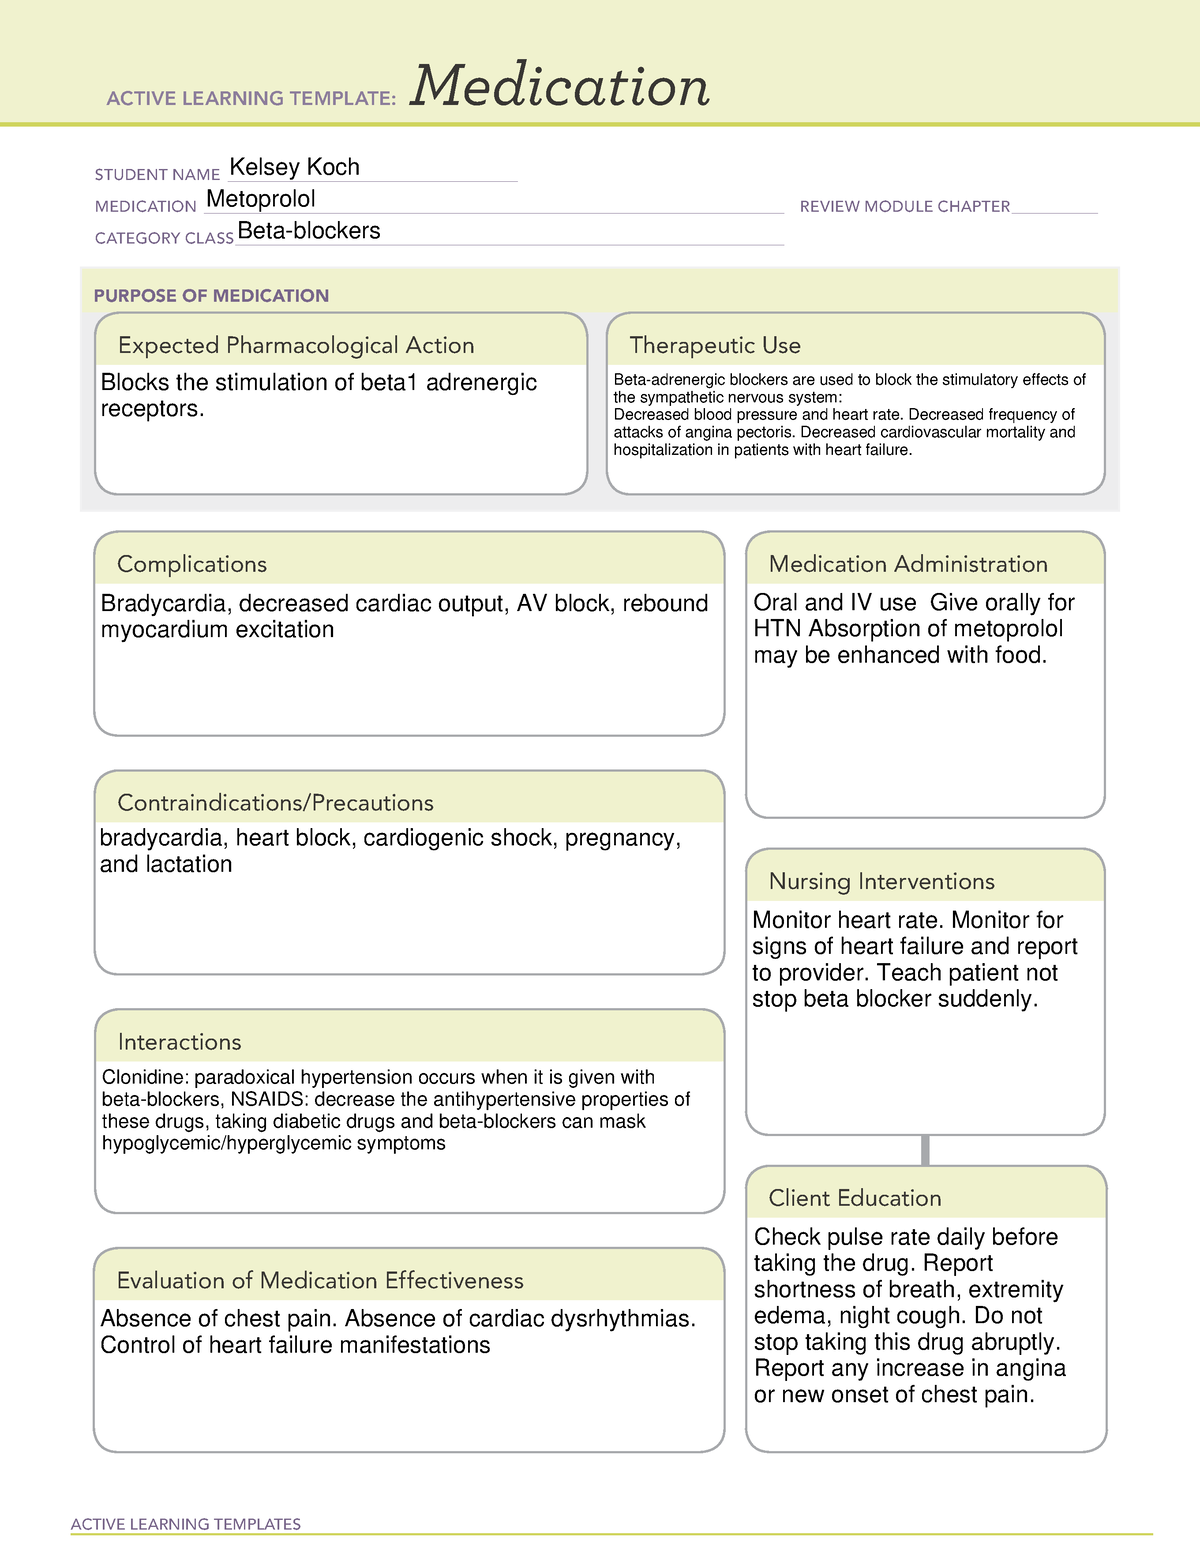 metoprolol-medication-template